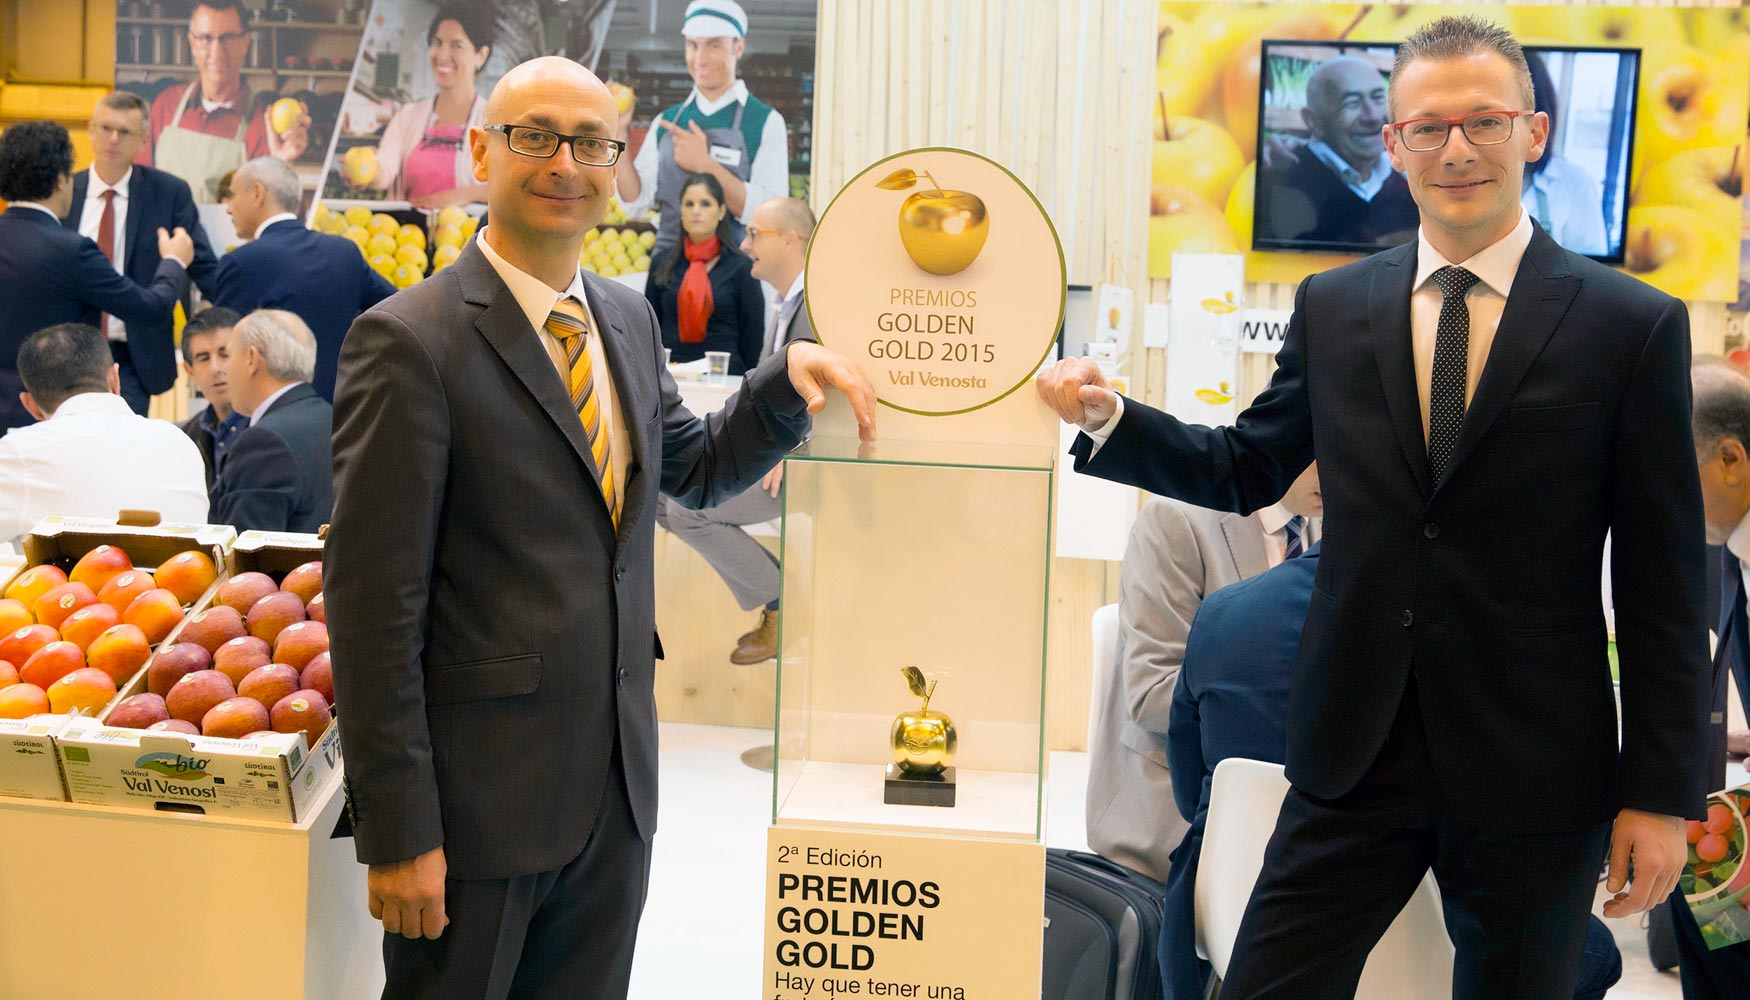 2 Premios Golden Gold: Michael Grasser y Fabio Zanesco